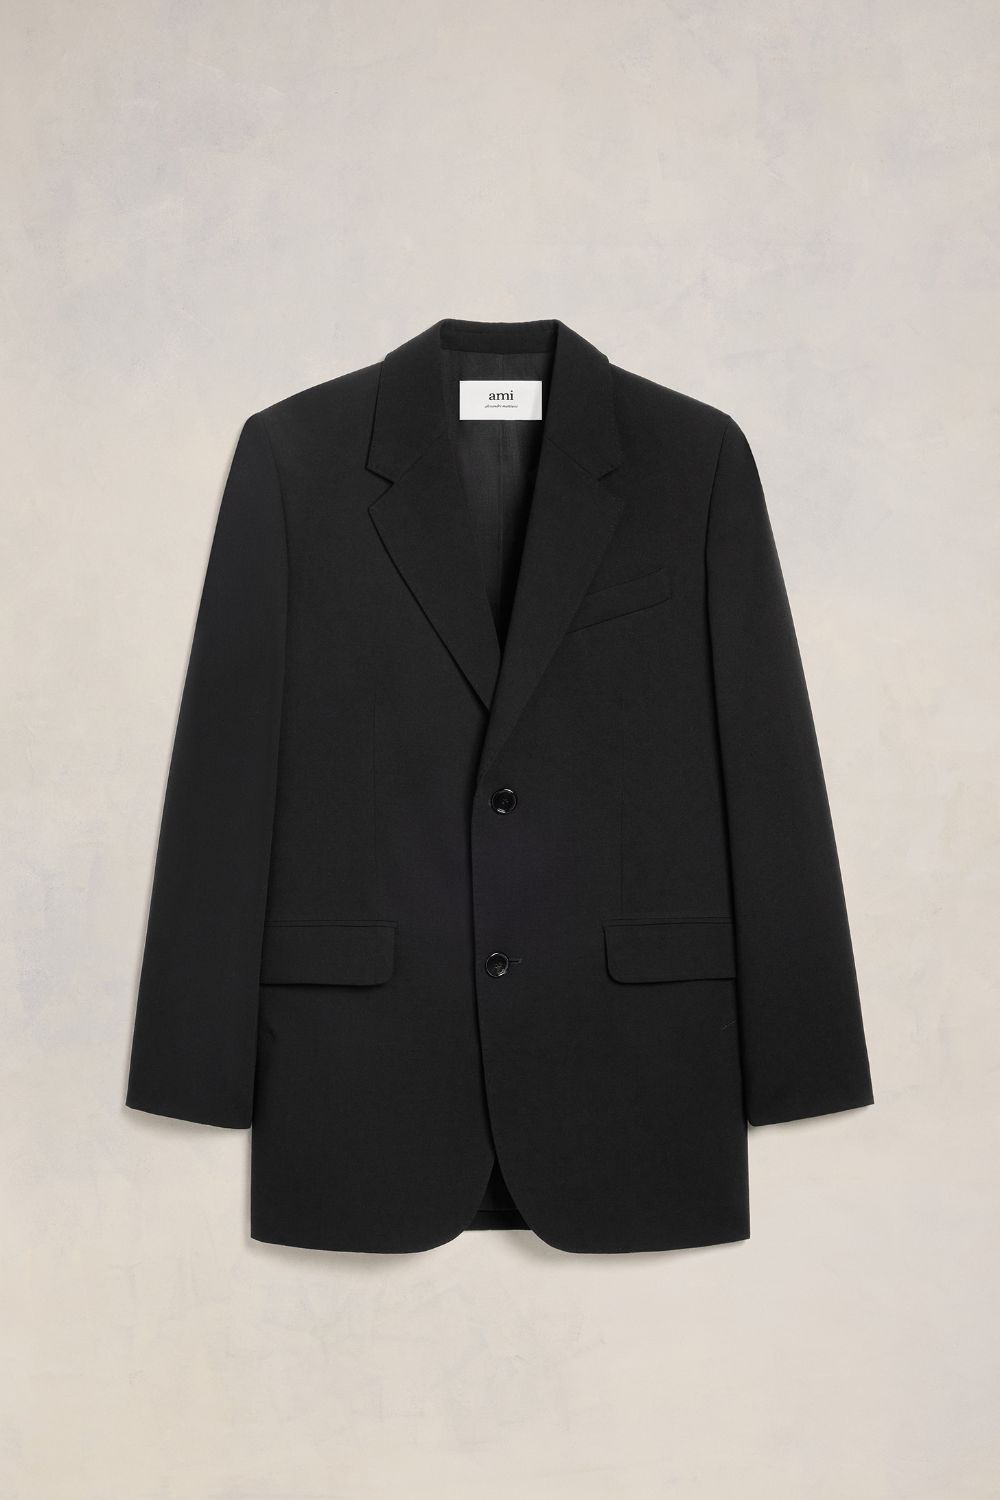 Ami Alexandre Mattiussi Oversize Two Buttons Jacket Black For Men